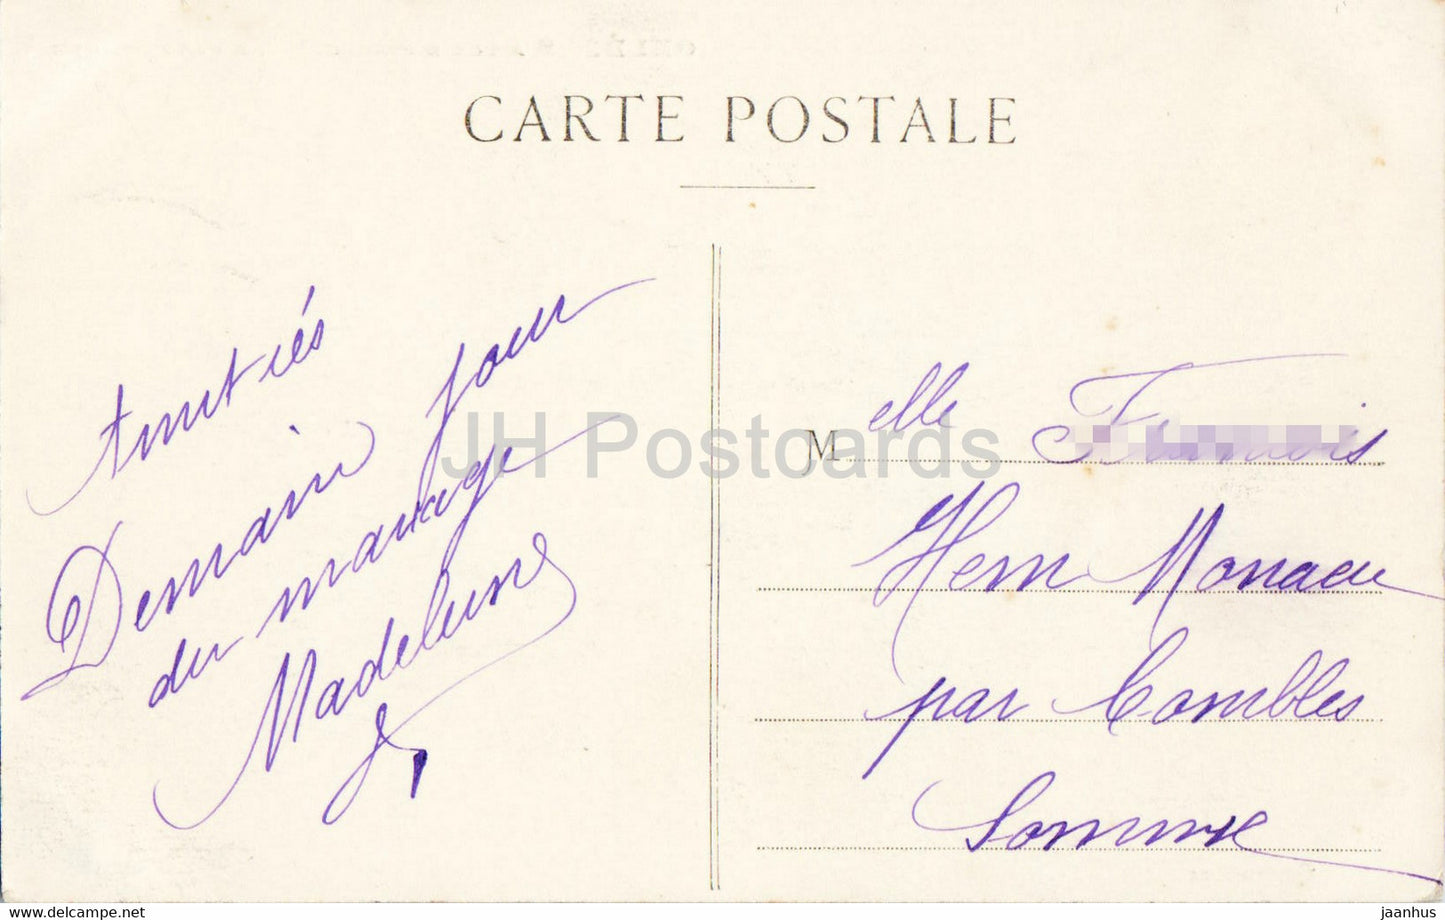 Orleans - a vol d'oiseau - La Cathedrale - Kathedrale - alte Postkarte - 1913 - Frankreich - gebraucht